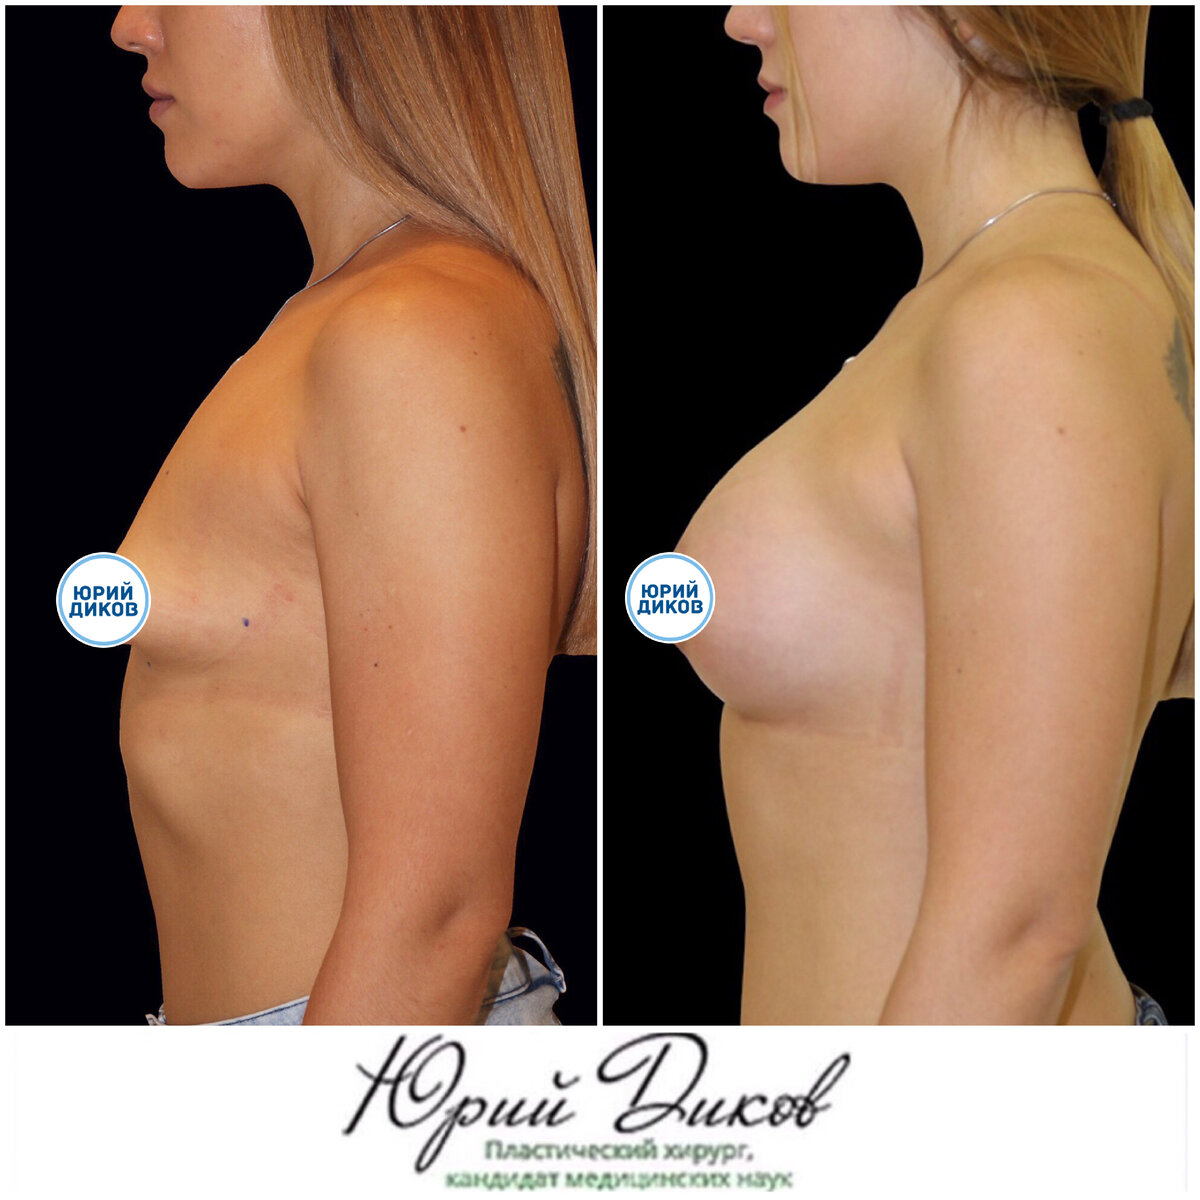 тубулярная деформация груди у женщин фото 22